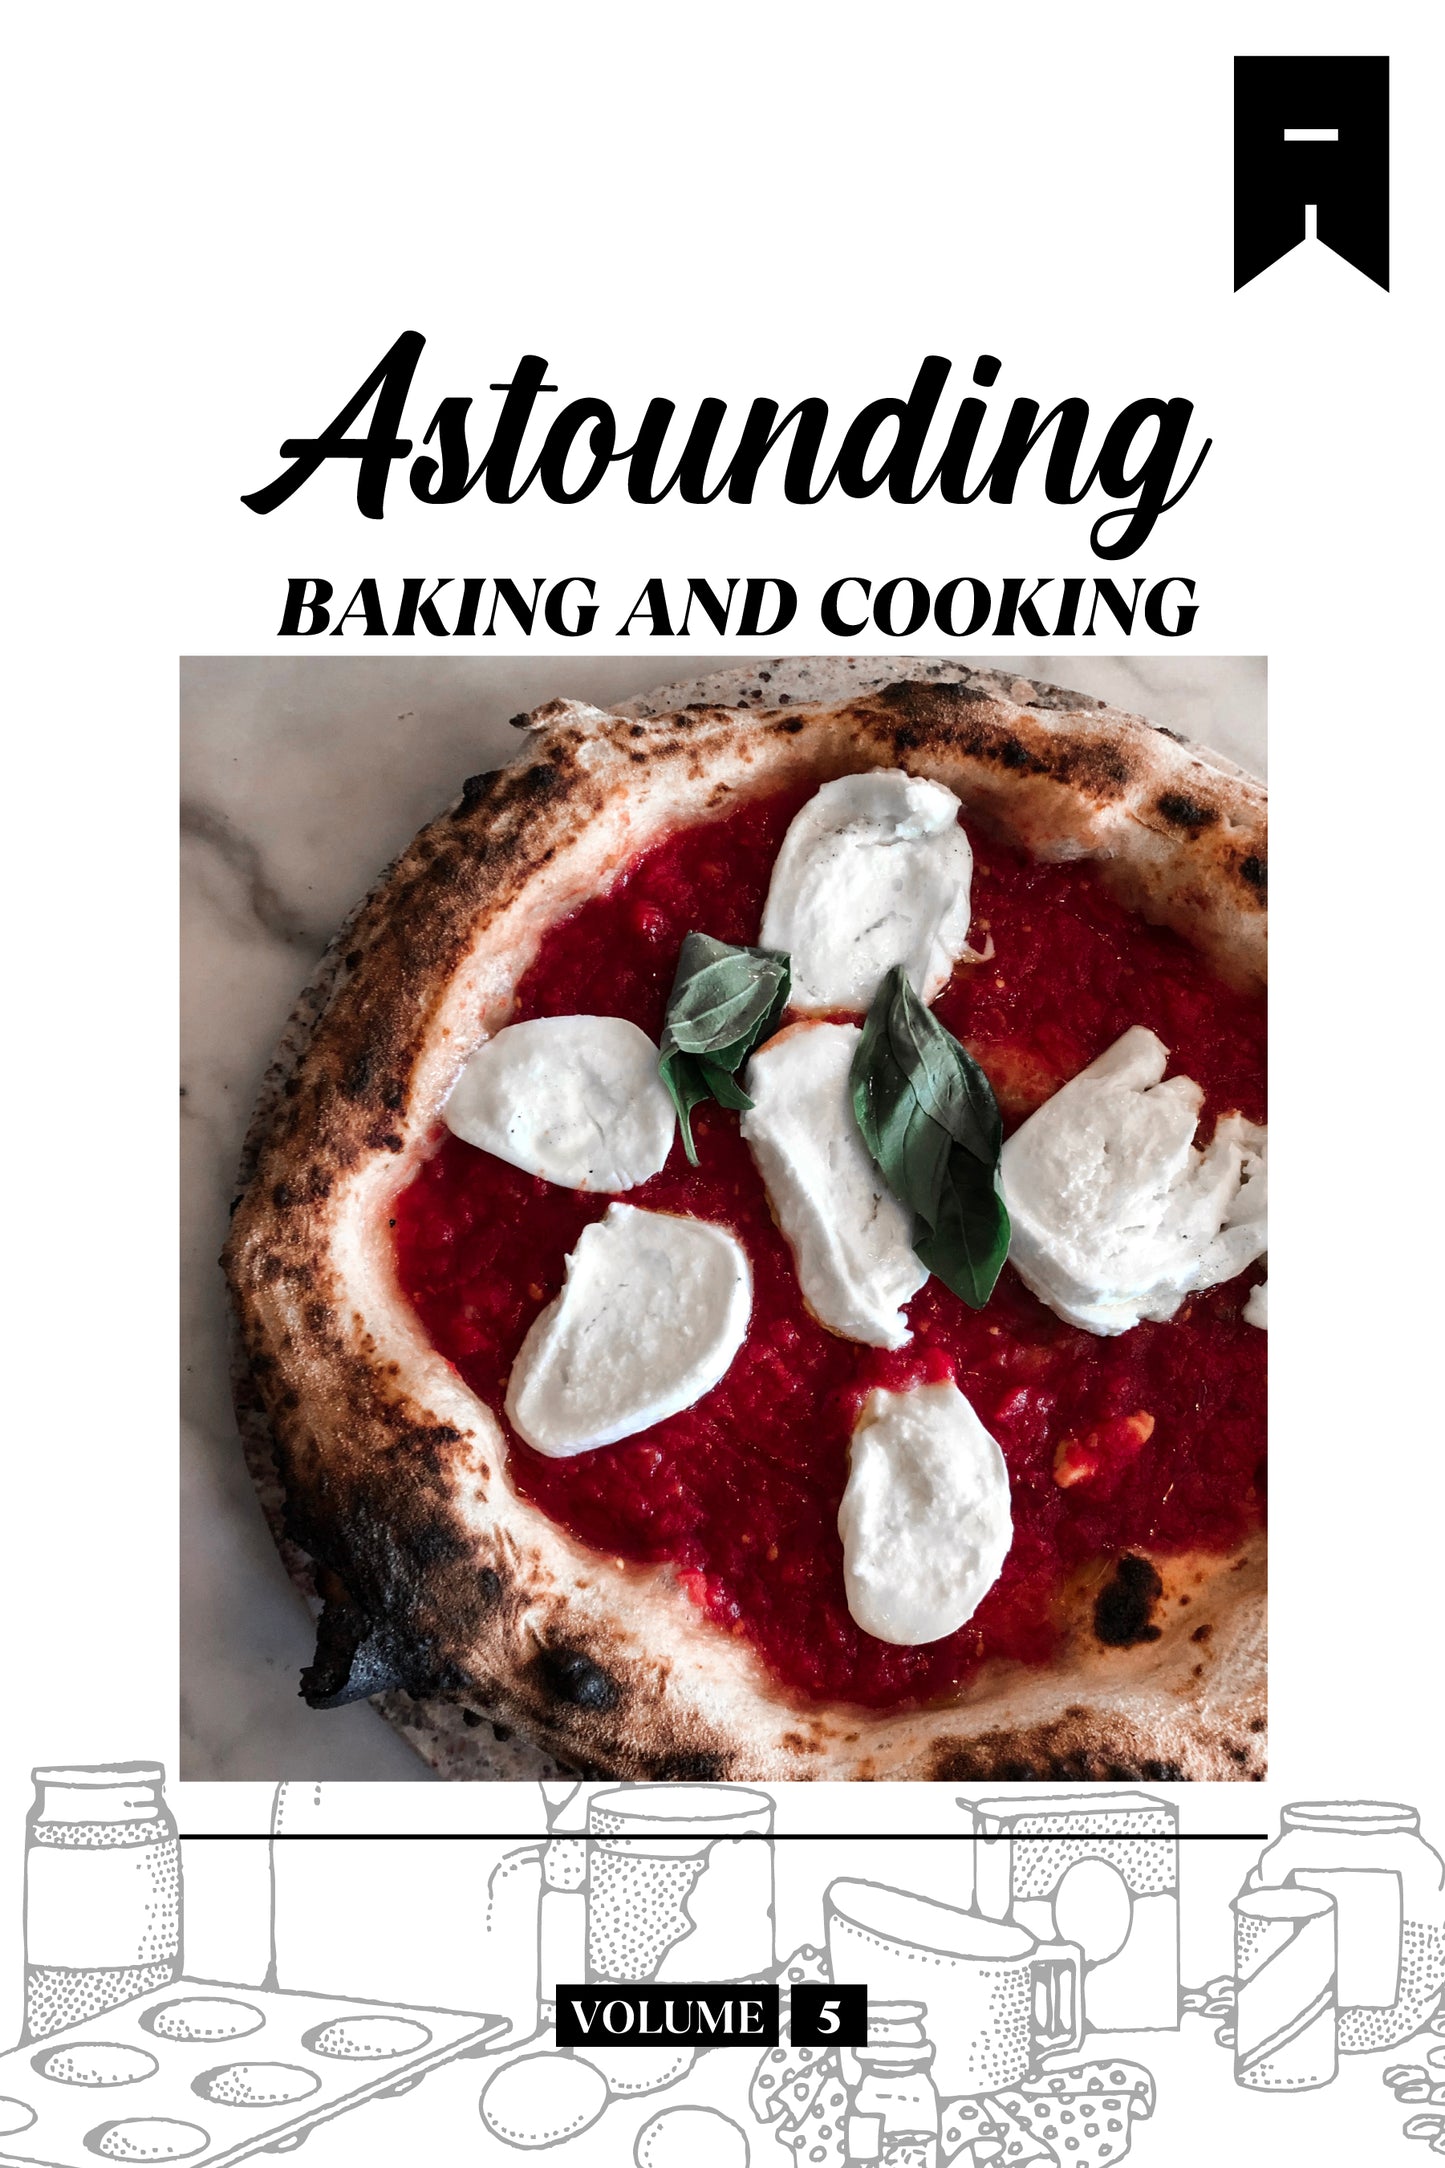 Astounding Baking (Volume 5) - Physical Book